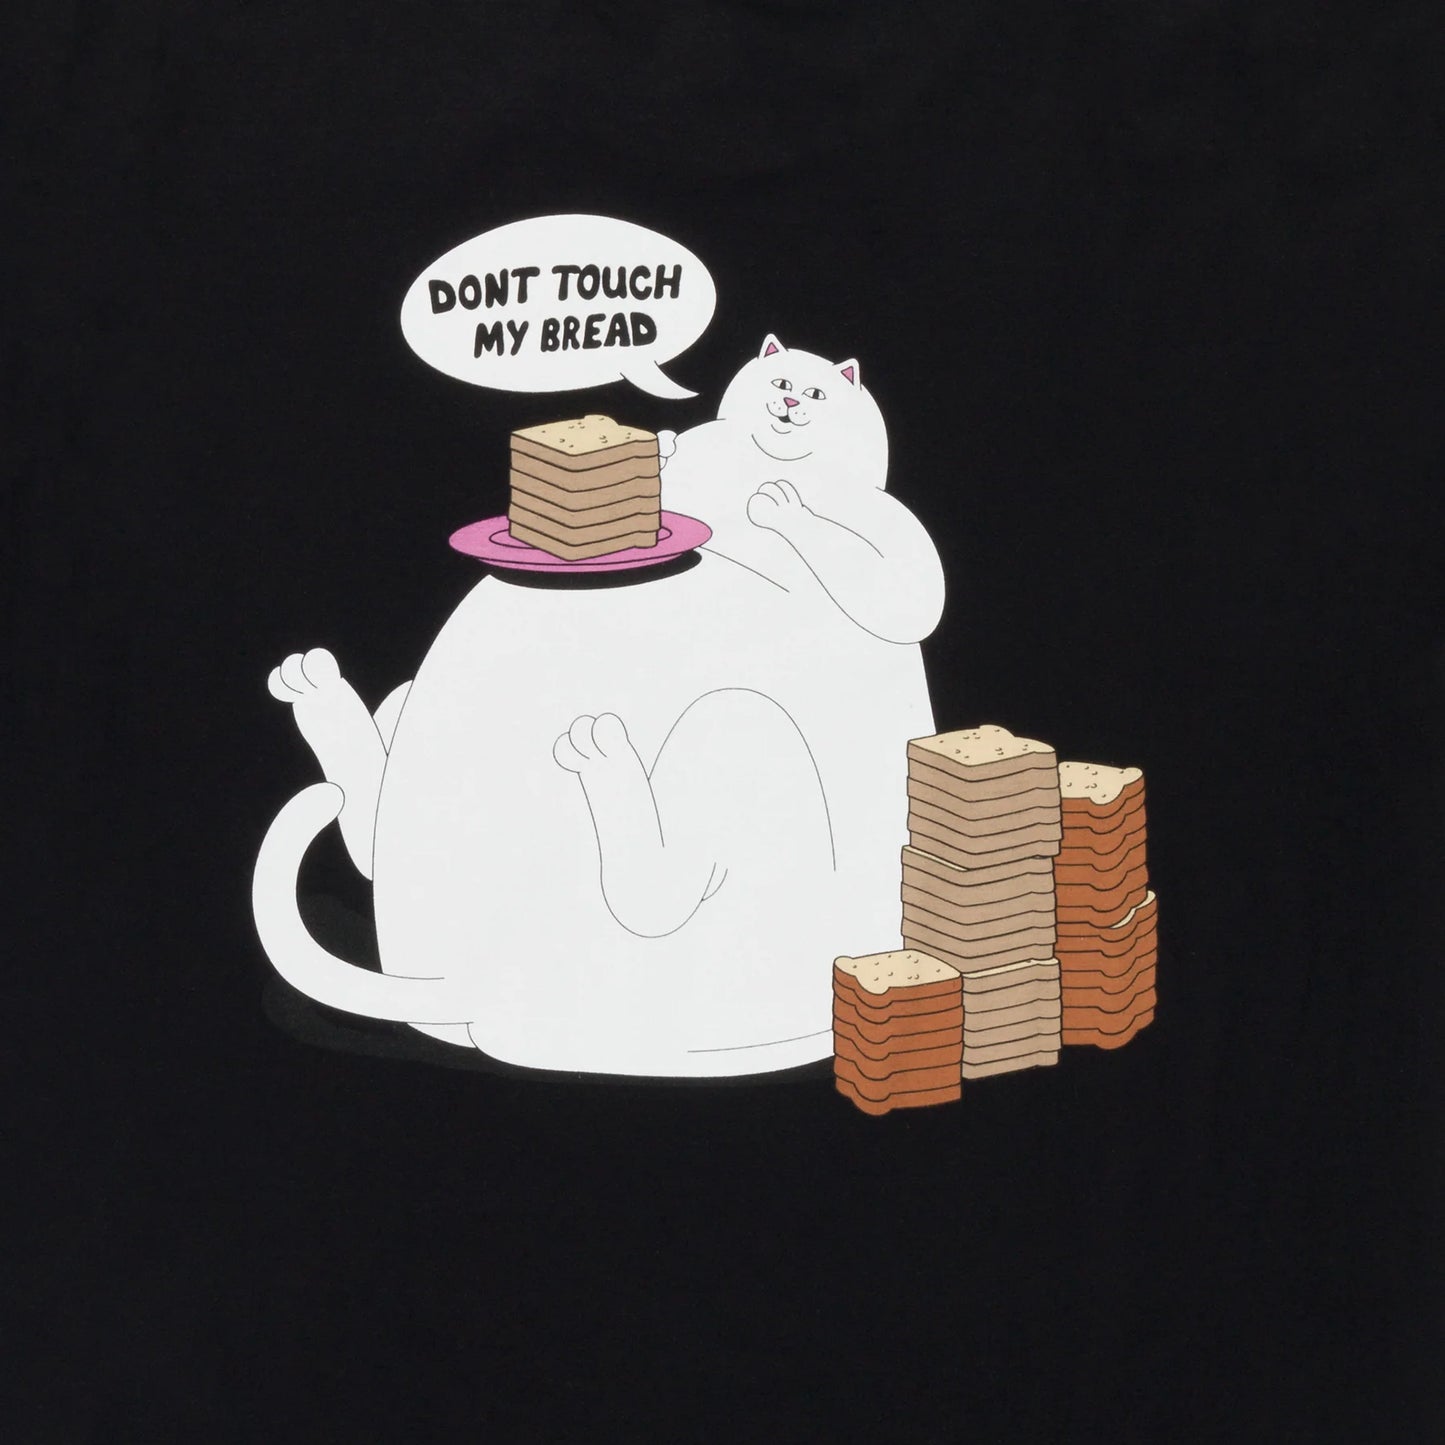 RIPNDIP Yay Bread Graphic T-Shirt